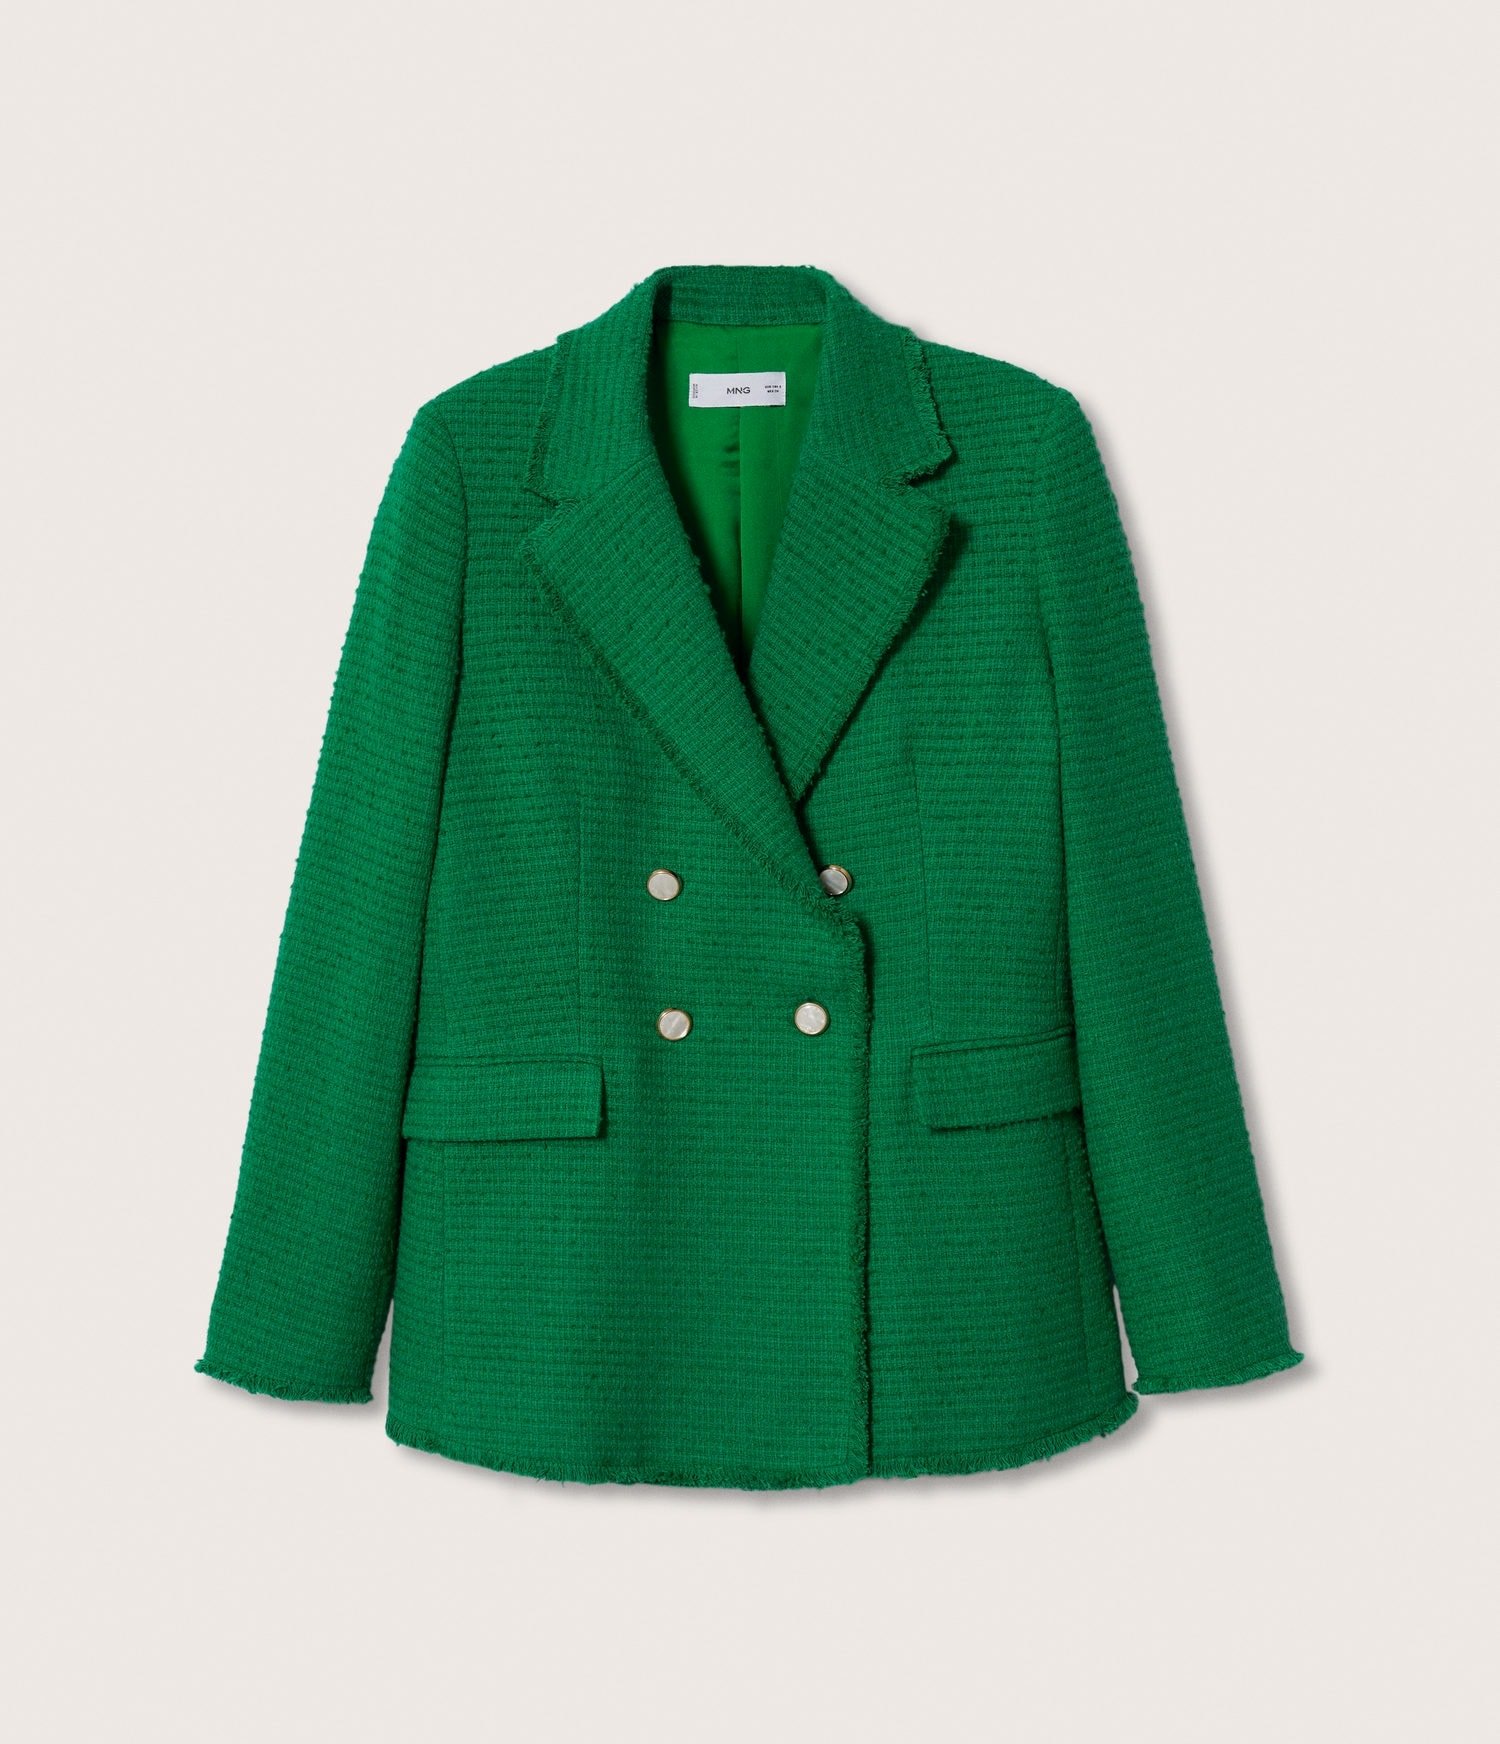 Mango Buttons Tweed Blazer in Green.jpg